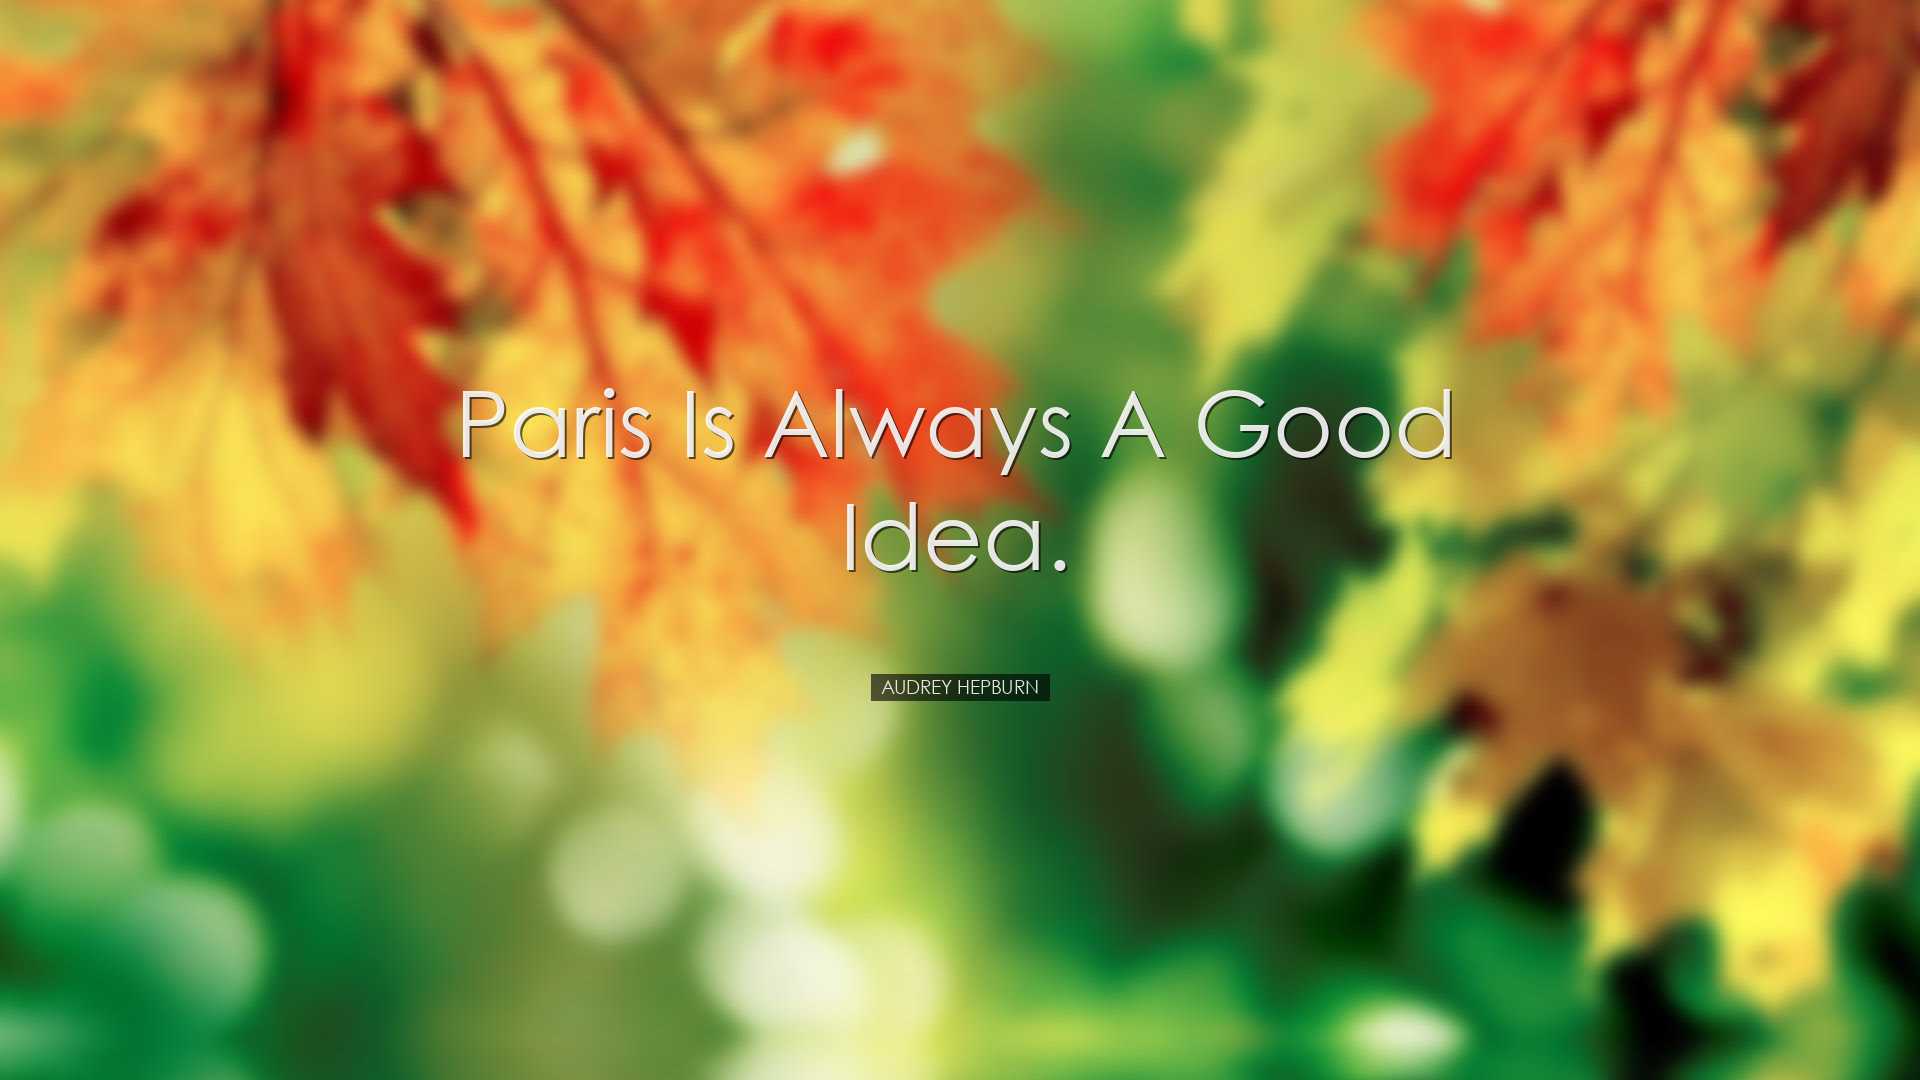 Paris is always a good idea. - Audrey Hepburn